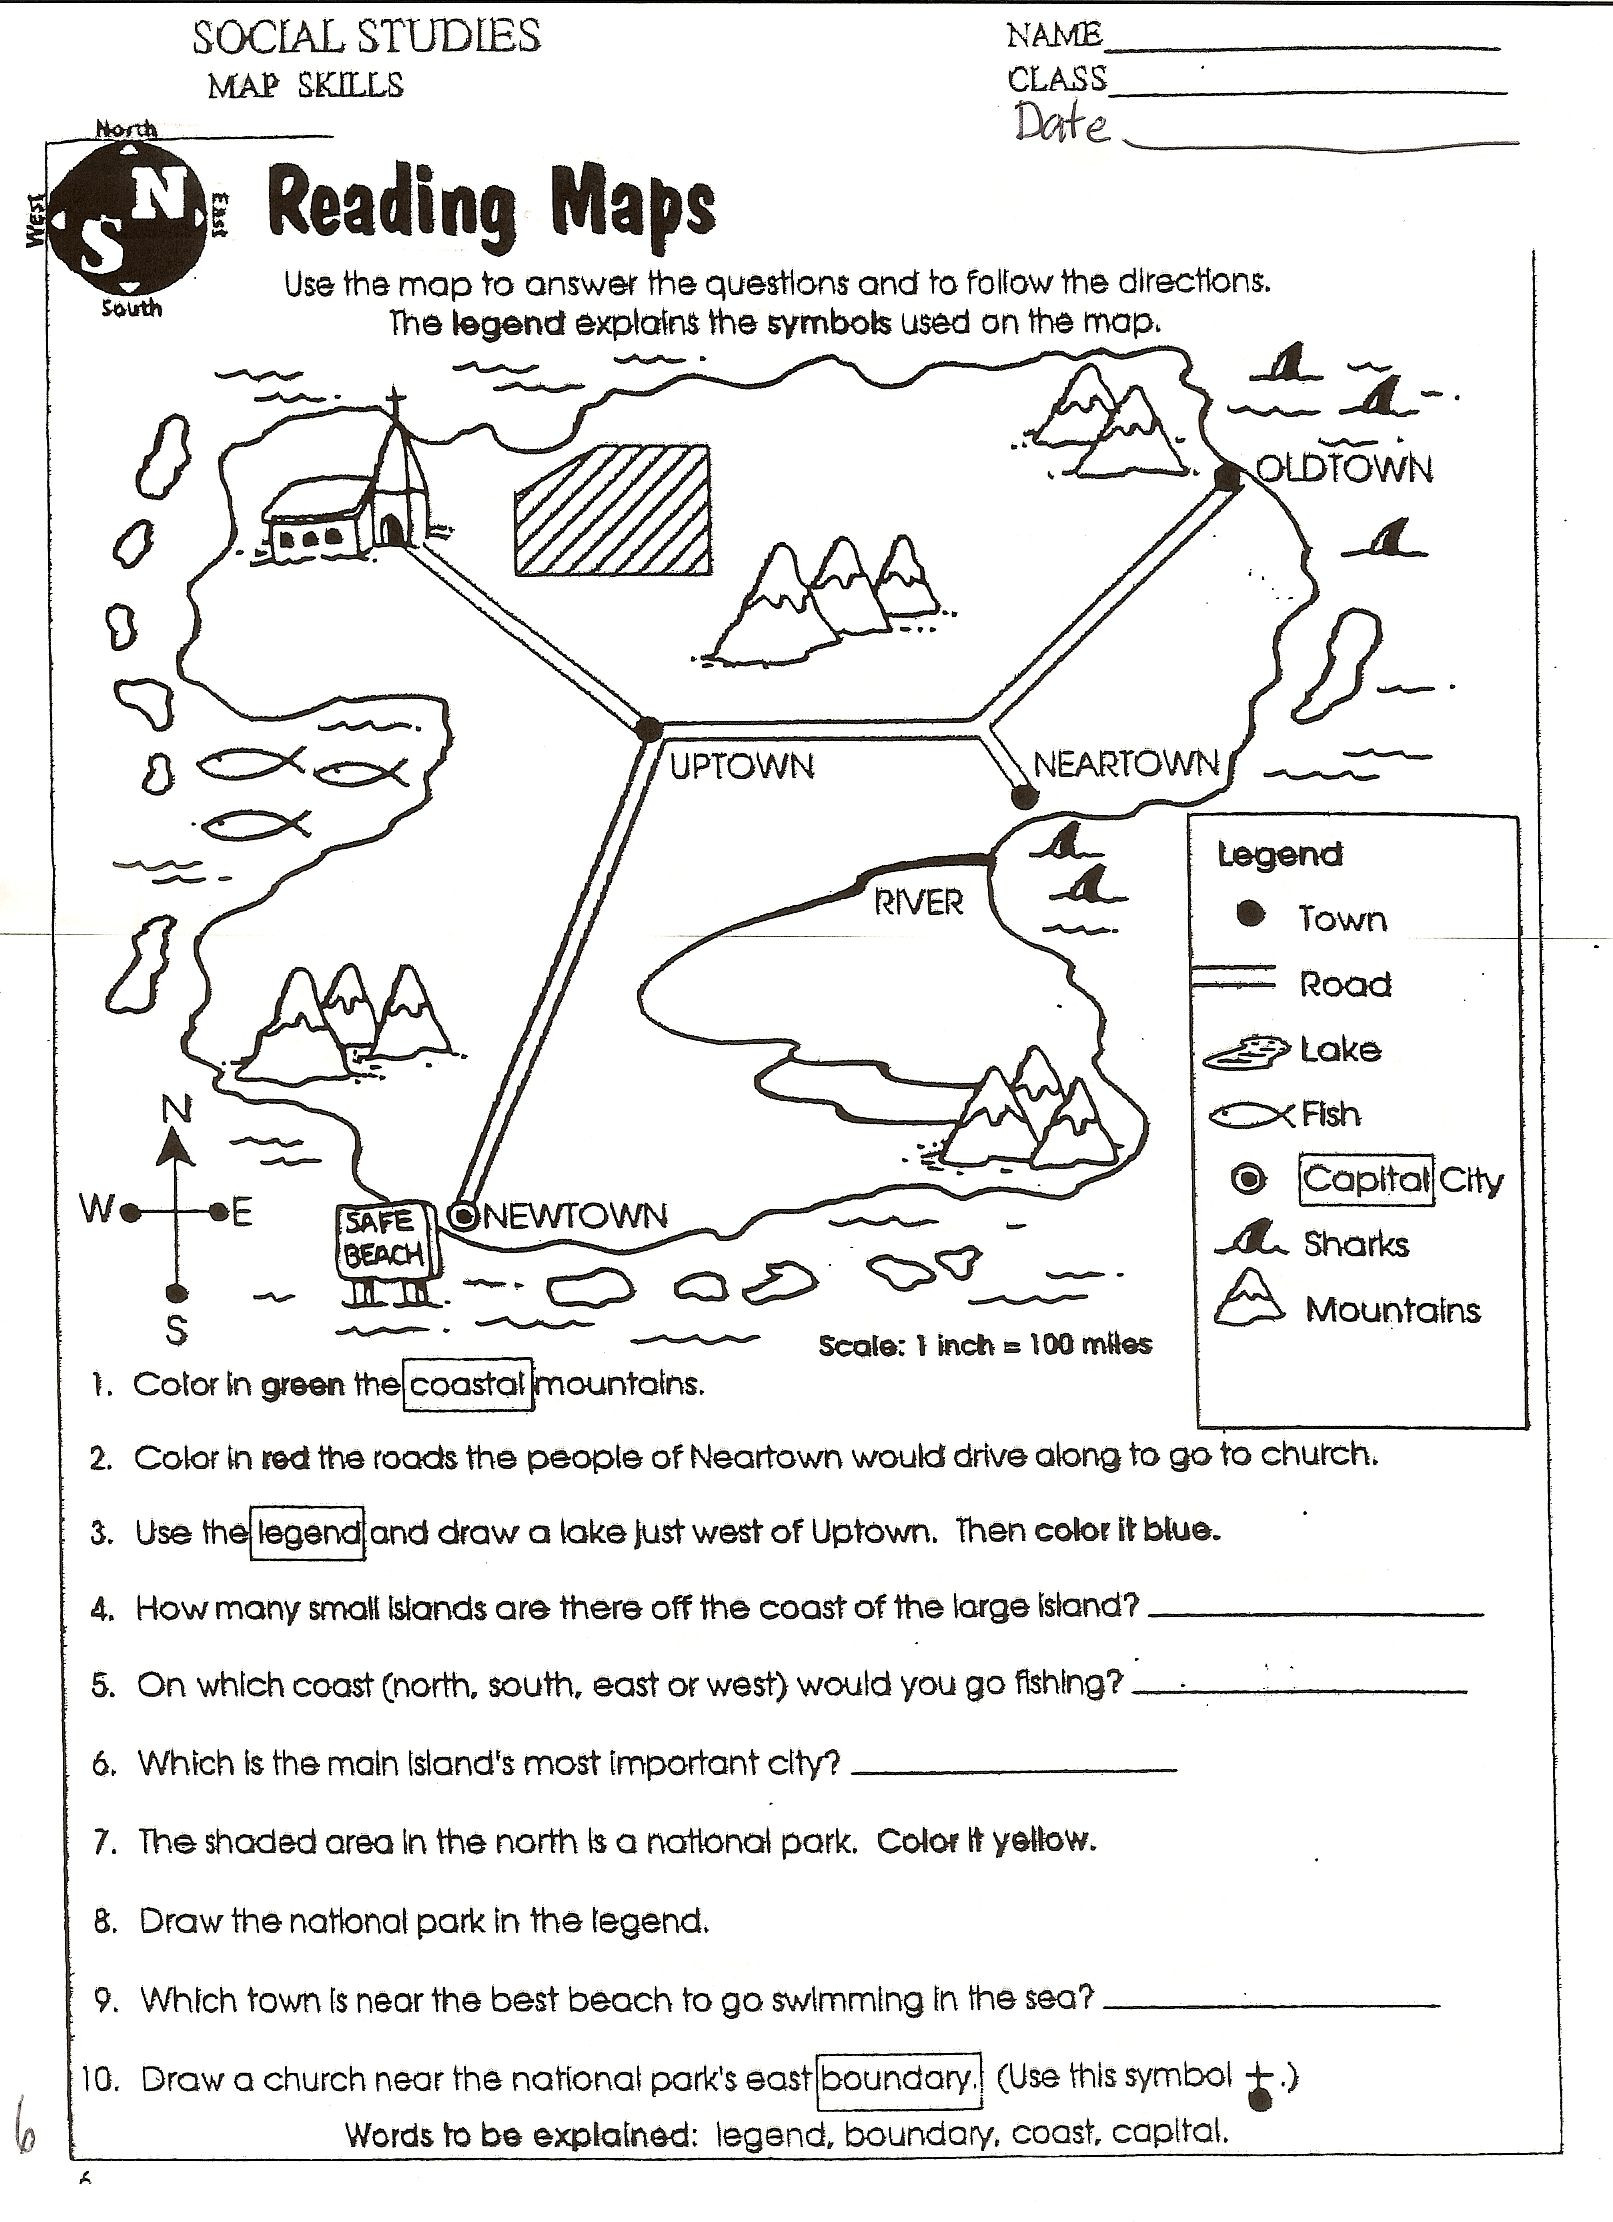 Parts Of A Map Worksheet social Stu S Skills